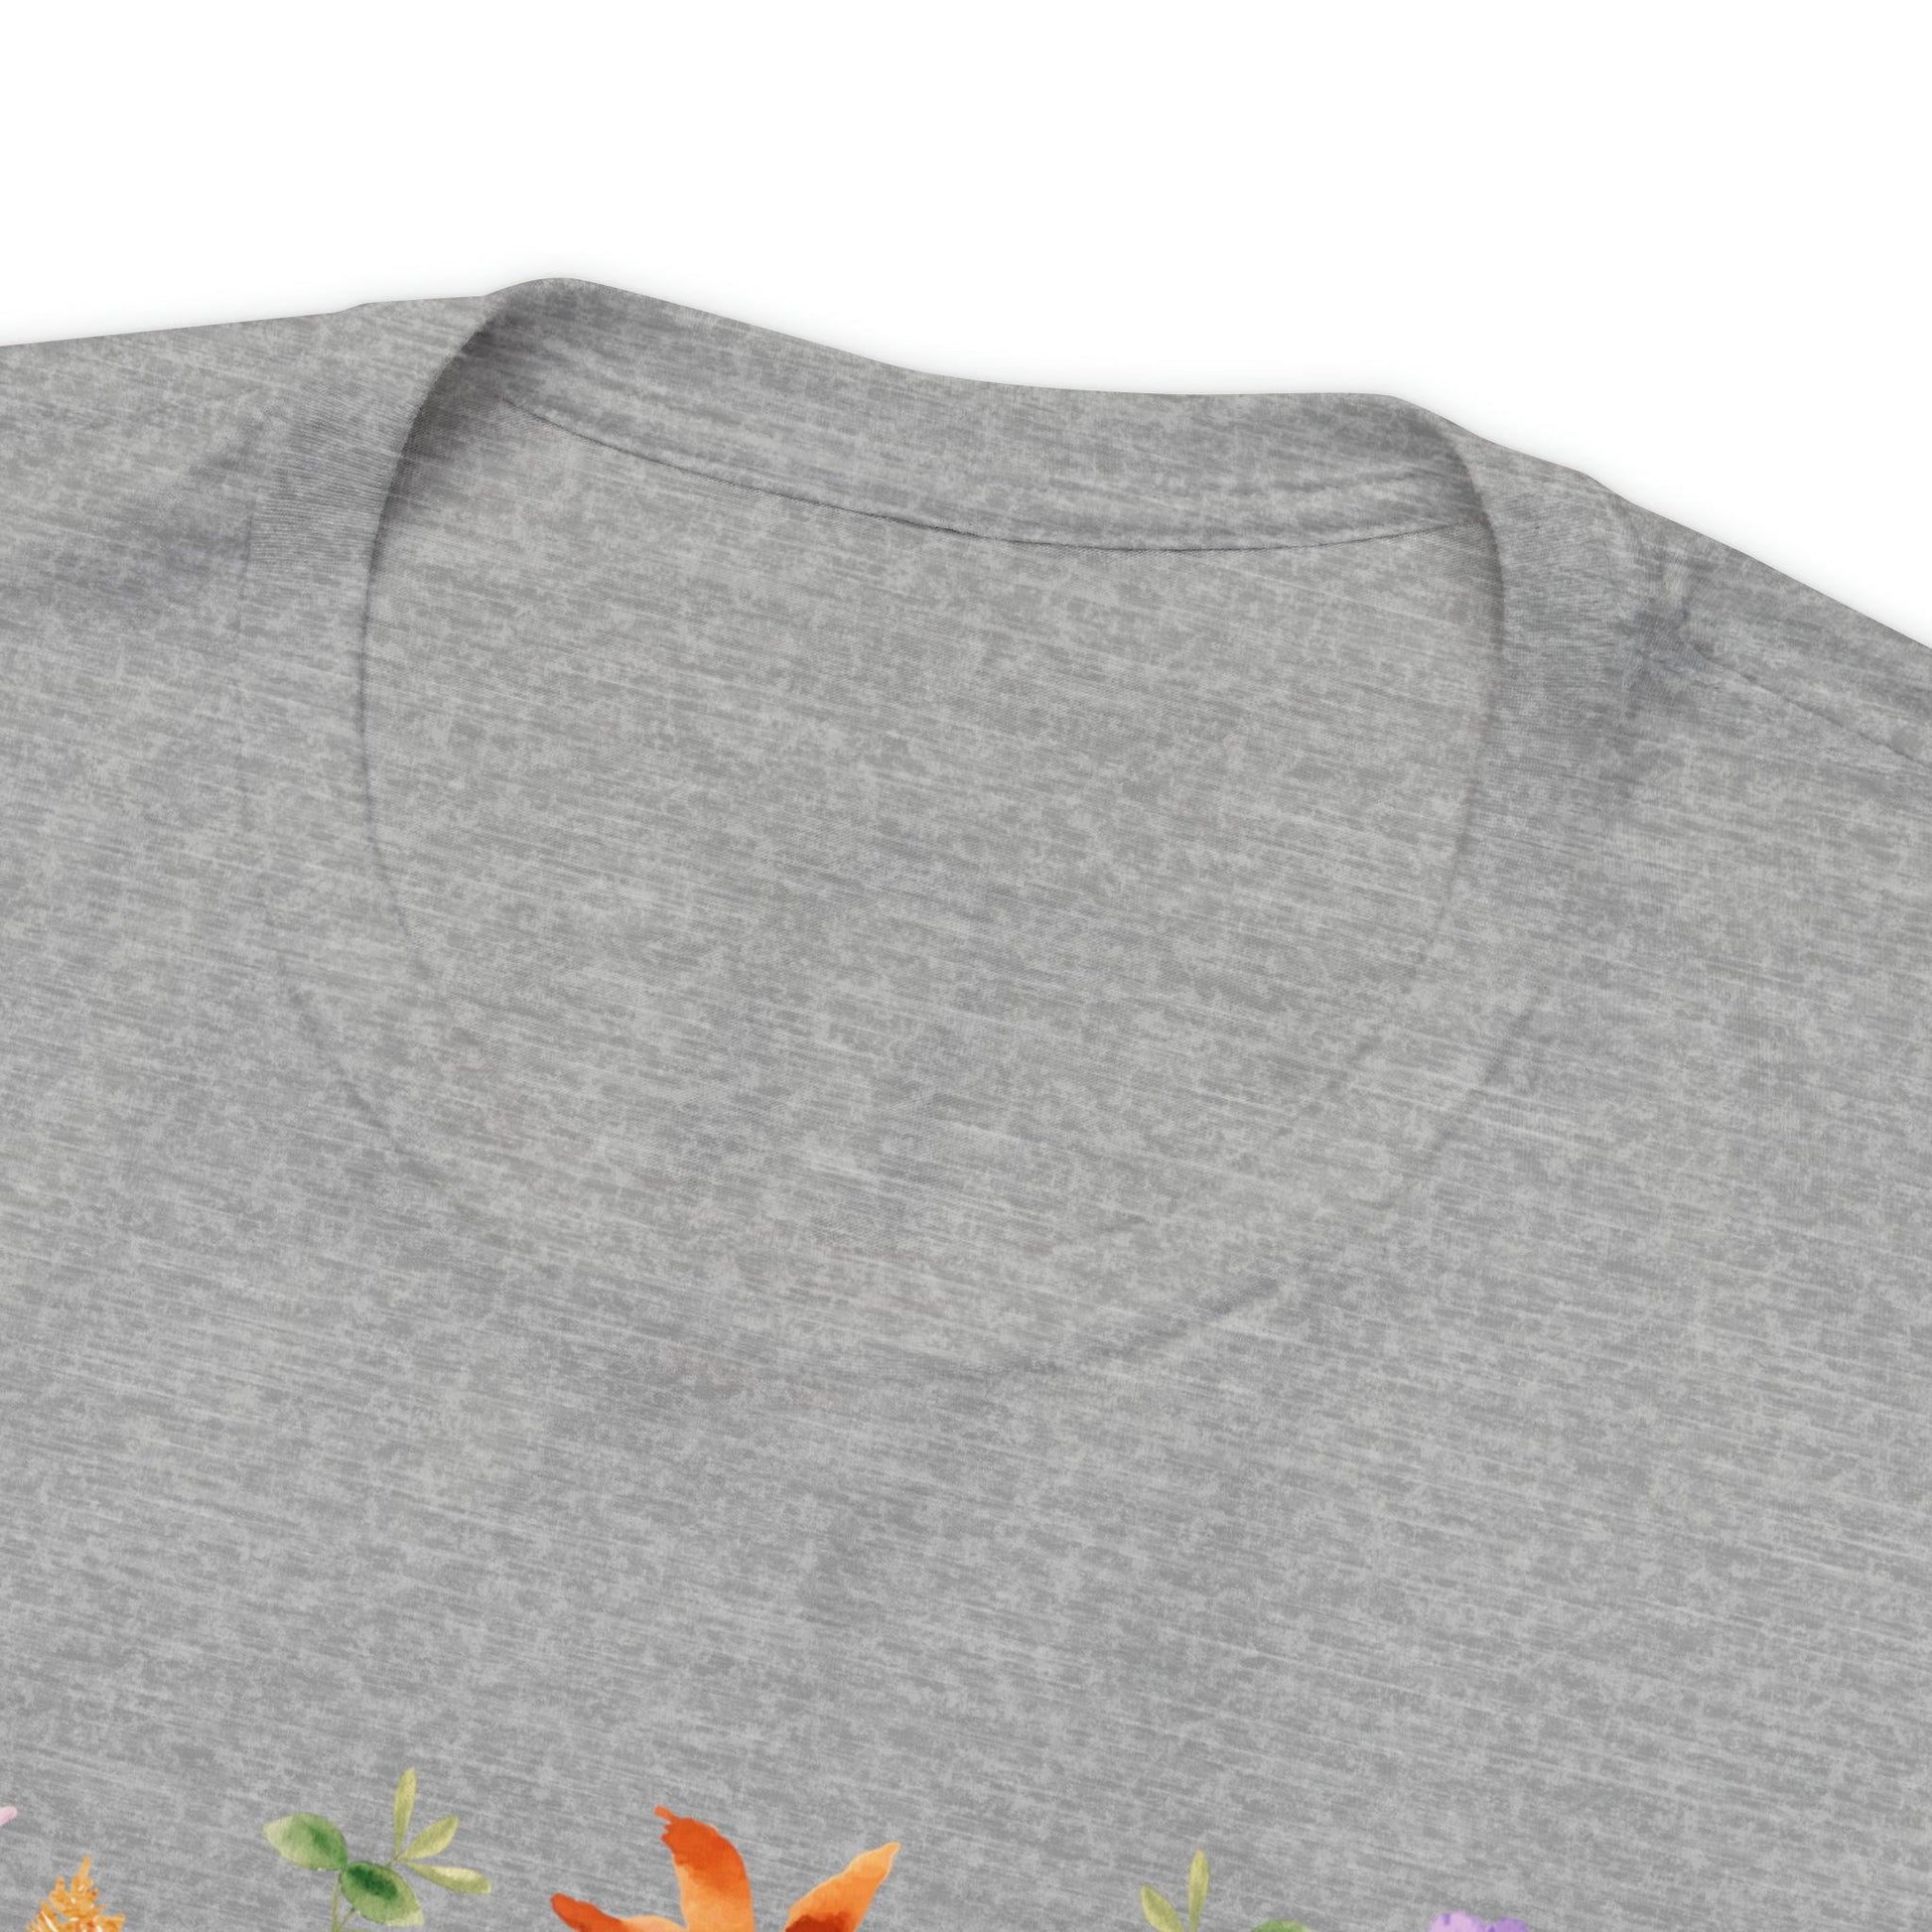 Wildflower Tshirt, Stay Wild Flowers Shirt, Floral Tshirt, Flower Shirt, Gift for Women, Ladies Shirts, Best Friend Gift, Plant Mom shirt - Giftsmojo